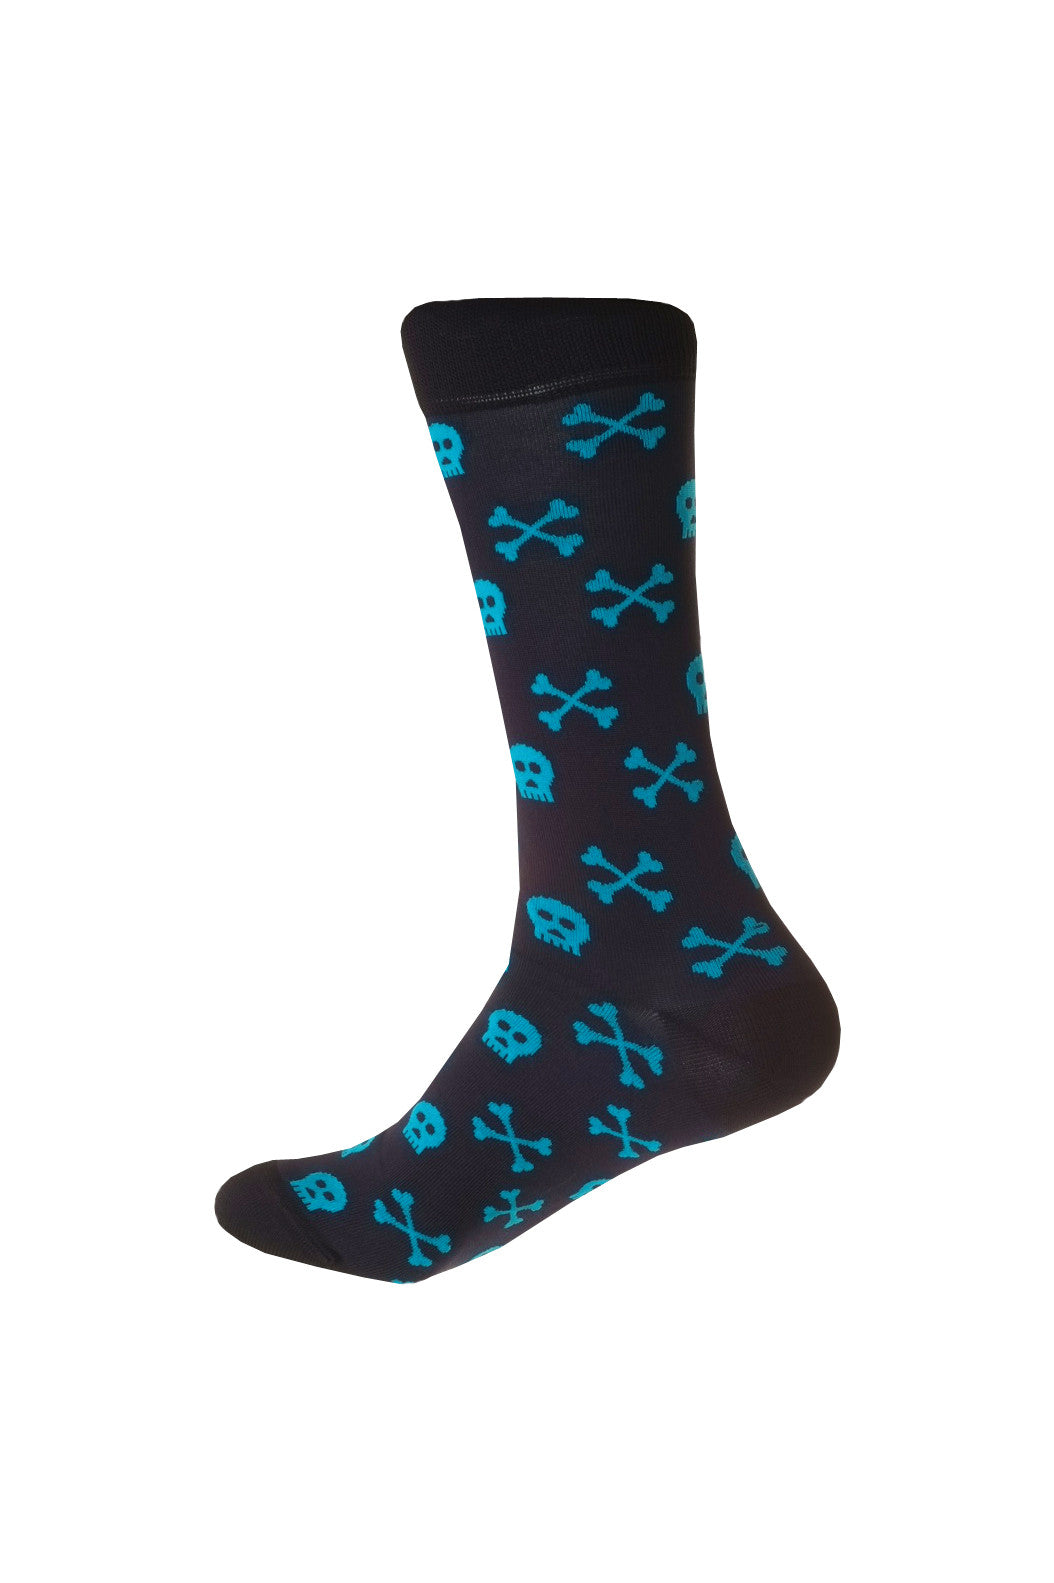 Giraffe Cool | Dark Blue And Light Blue Skulls And Bones Microfiber Socks Foot Back